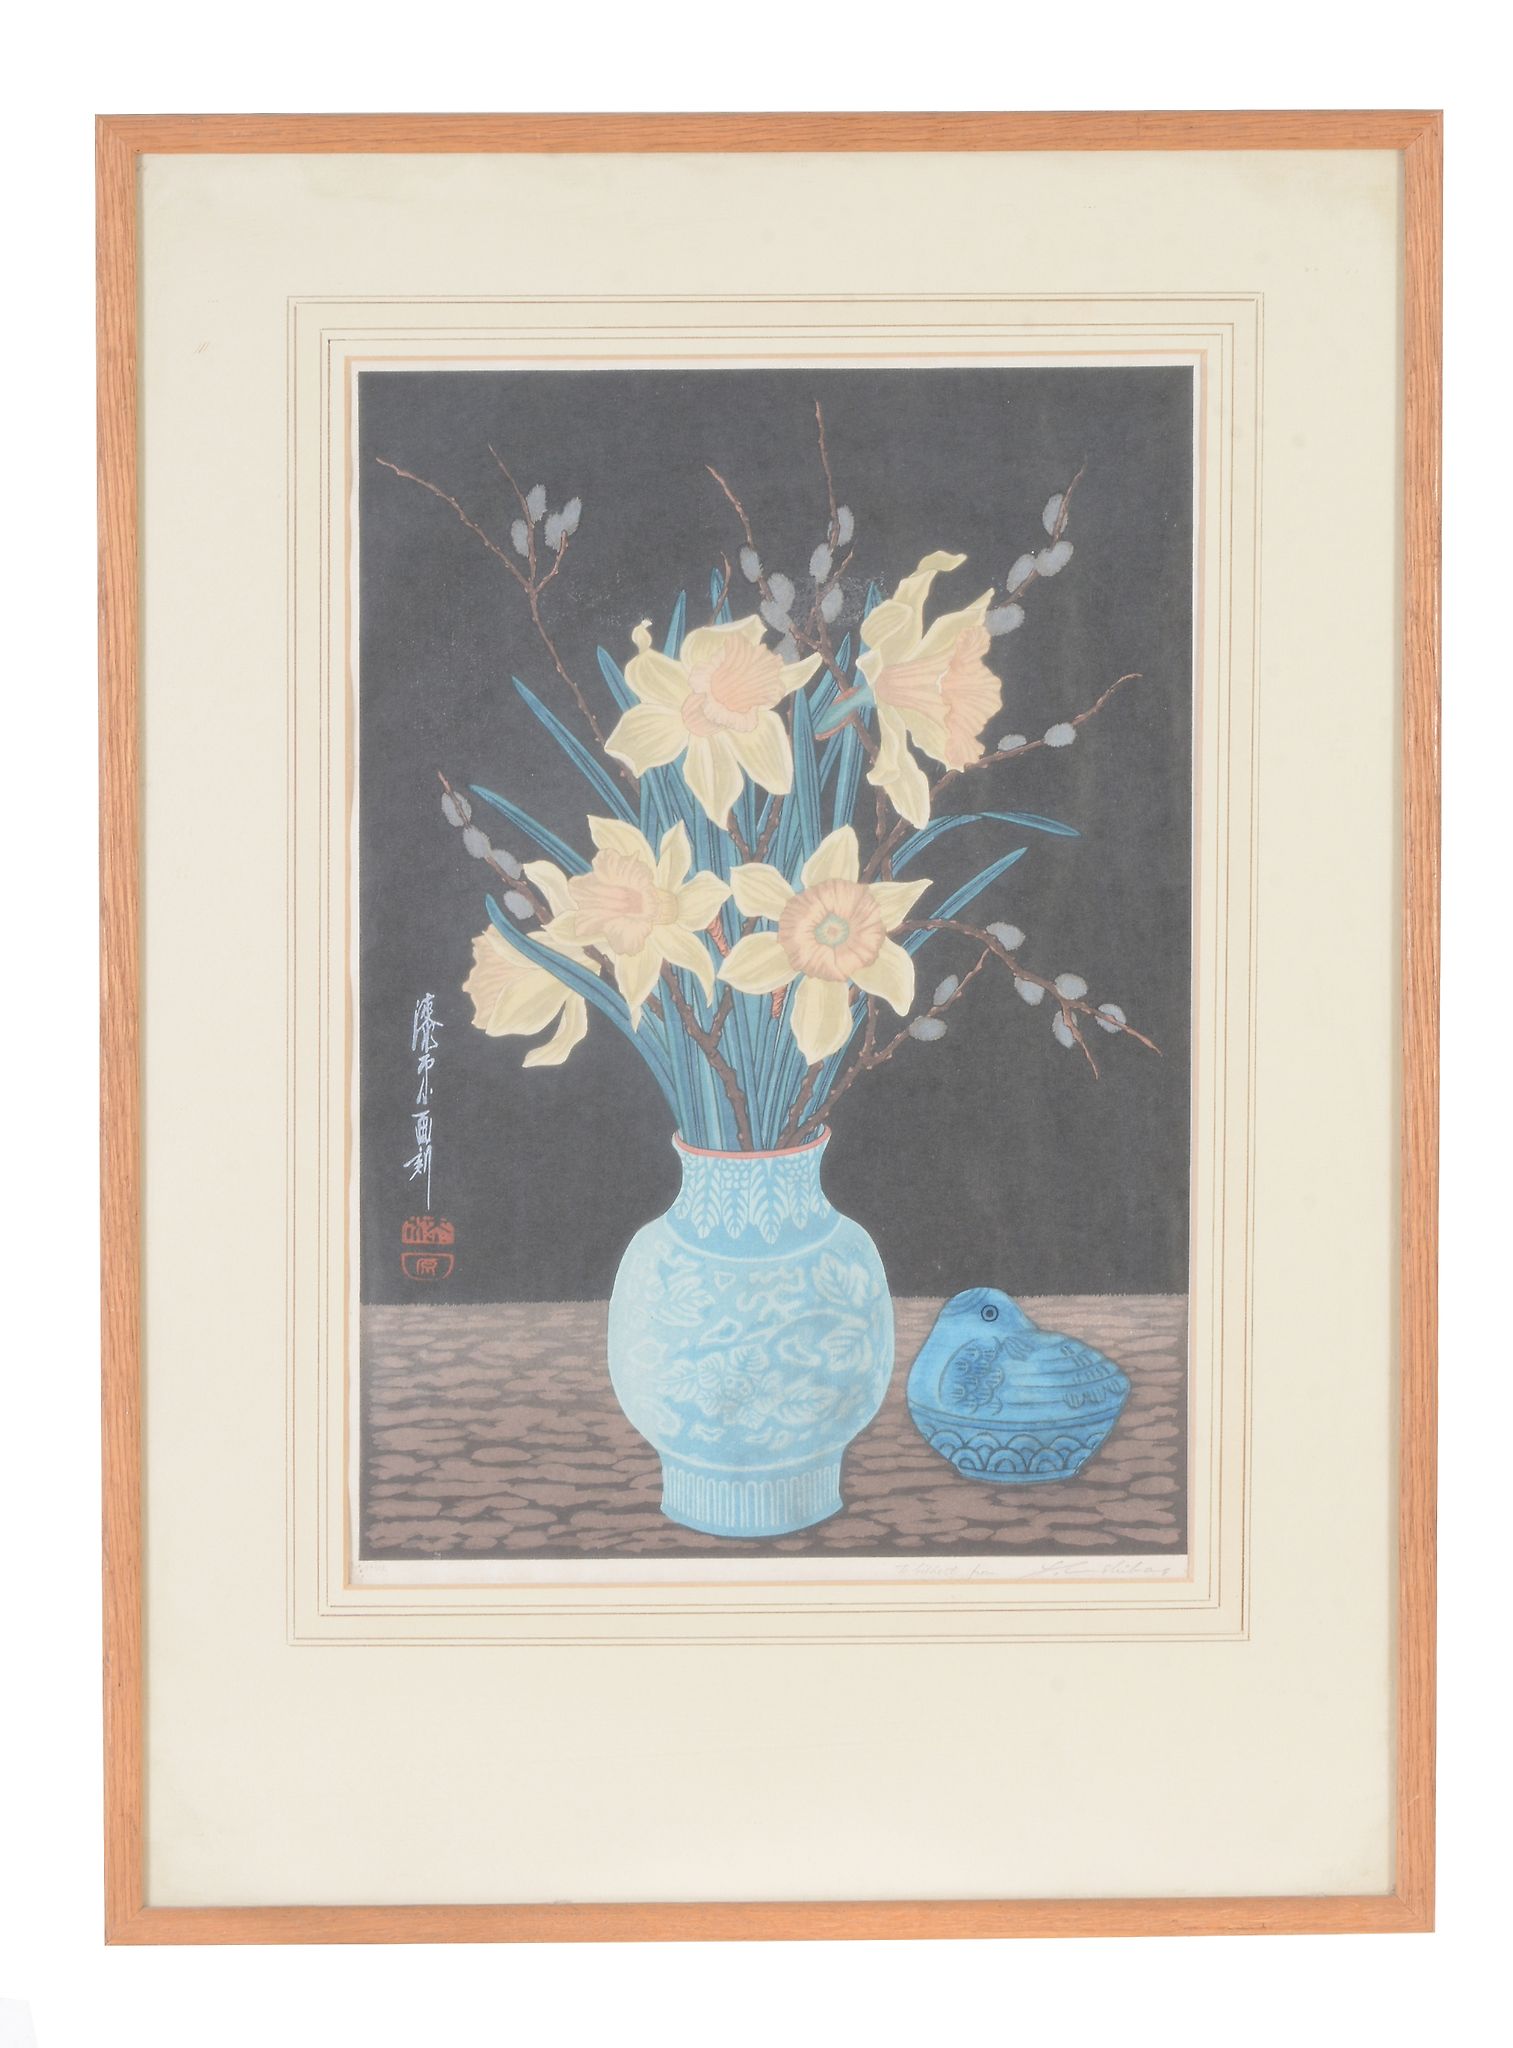 Urushibara (Yoshijiro, 1888-1953), Daffodils in a blue vase, colour woodcut on laid paper, signed in